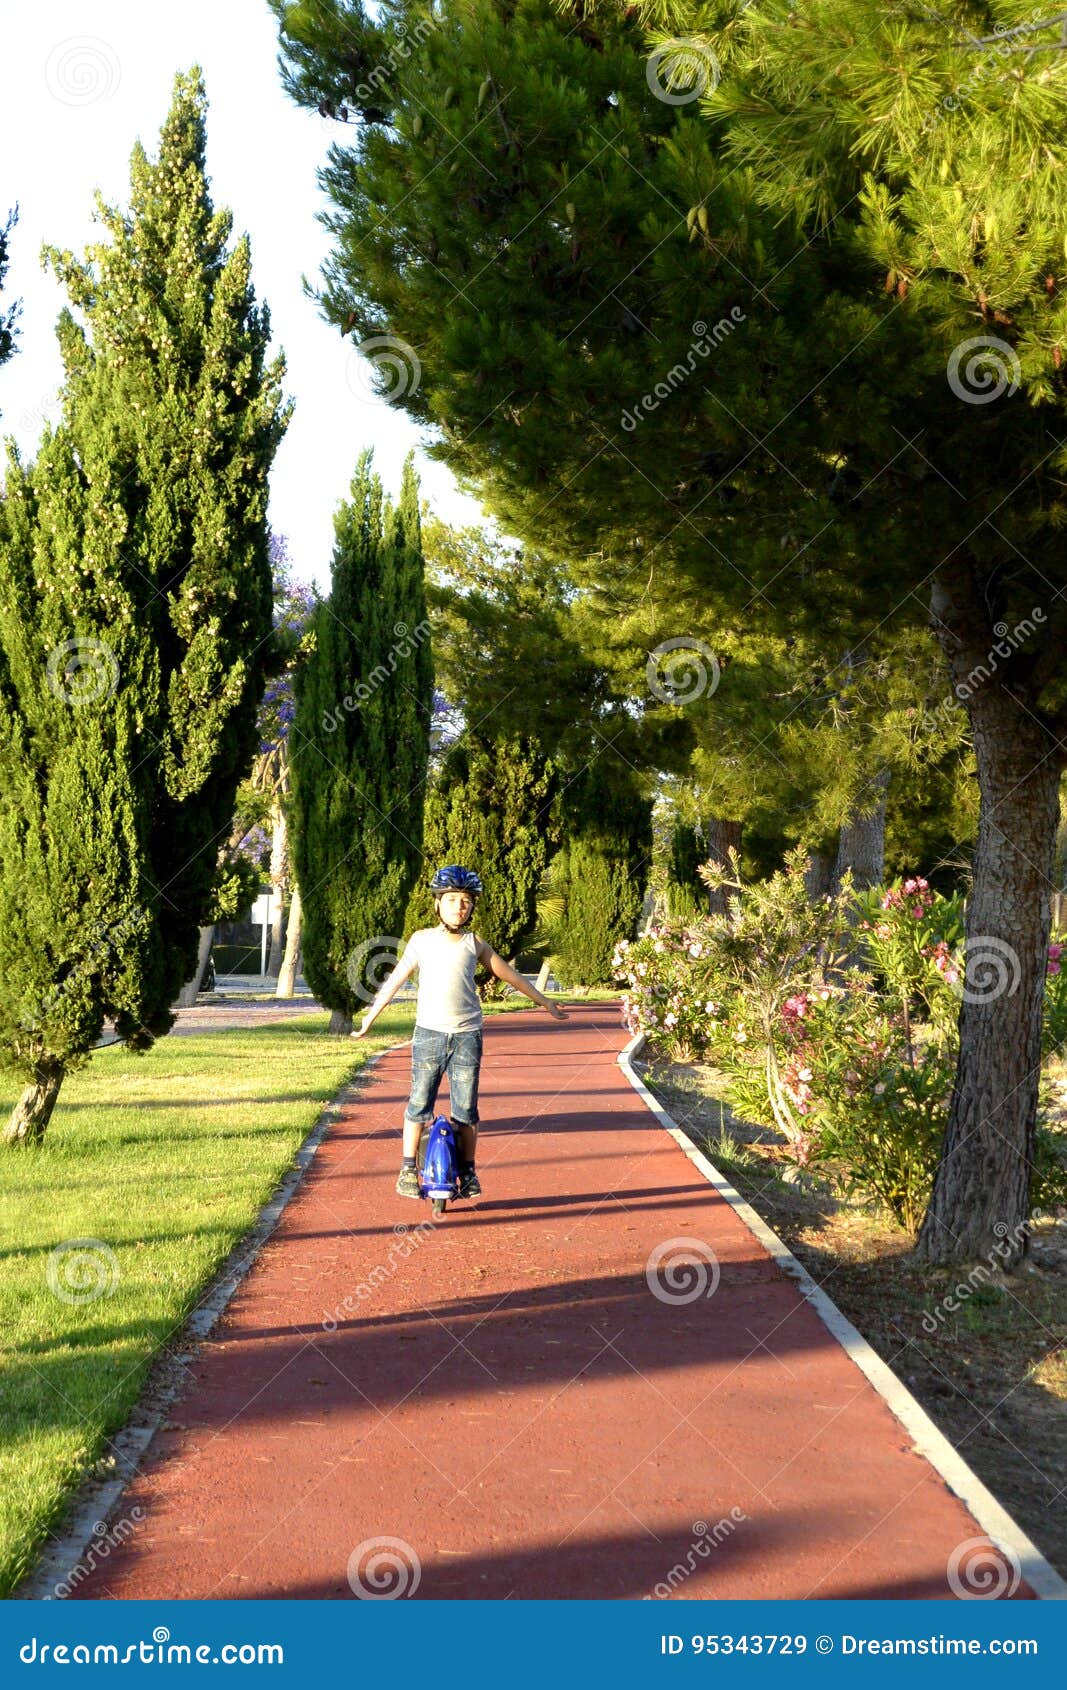 boy with helmet is riding monowheel on promenade